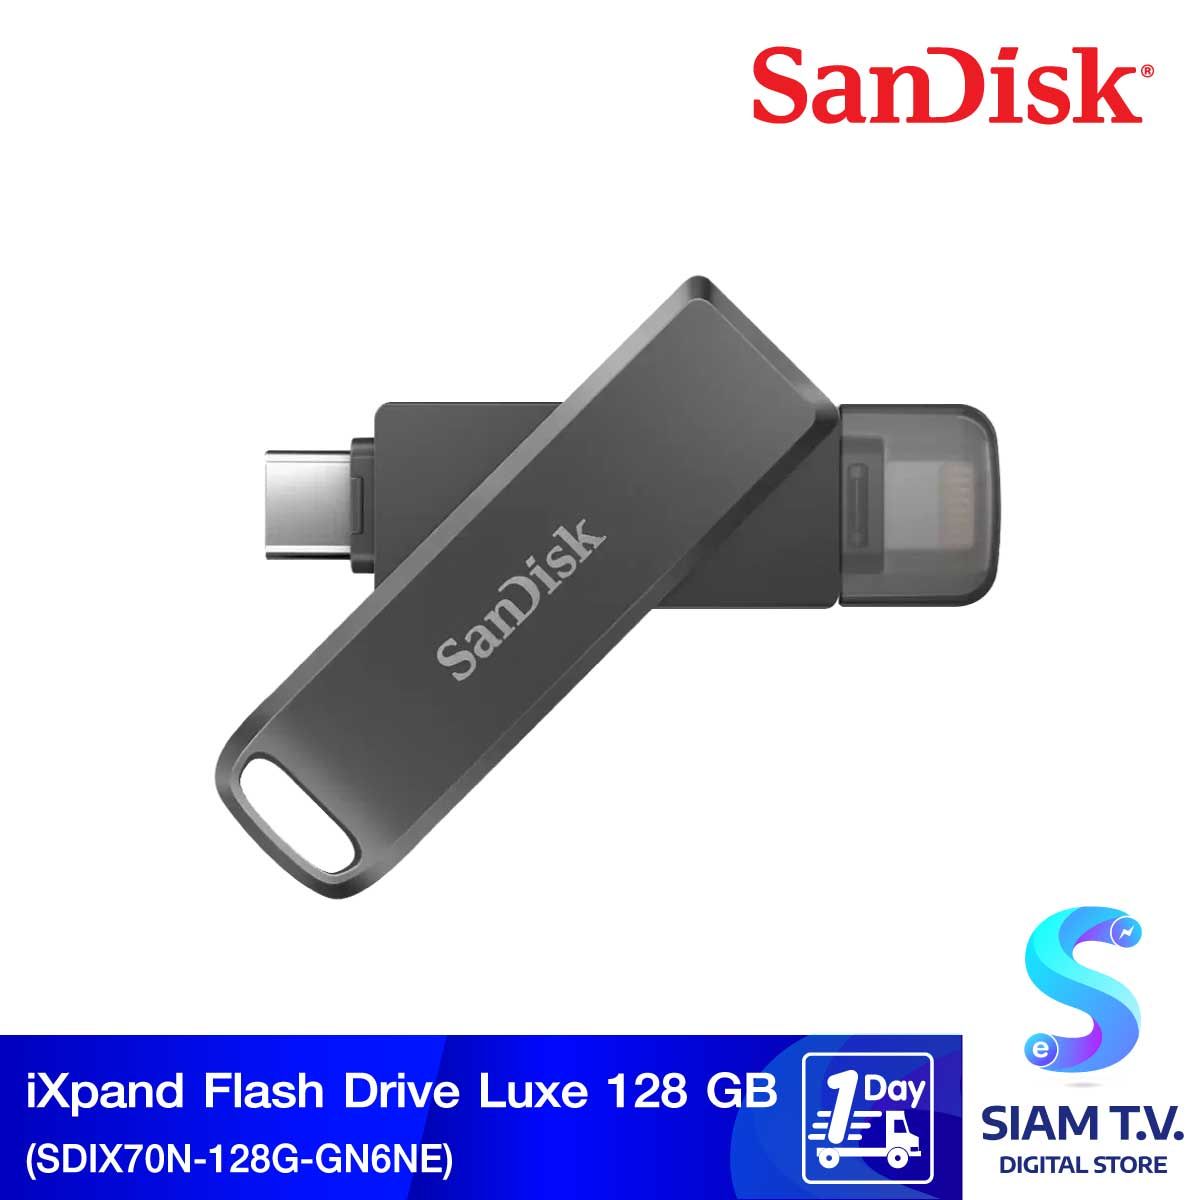 FLASH DRIVE (แฟลชไดร์ฟ) 128 GB SANDISK IXPAND FLASH DRIVE LUXE (SDIX70N-128G-GN6NE)